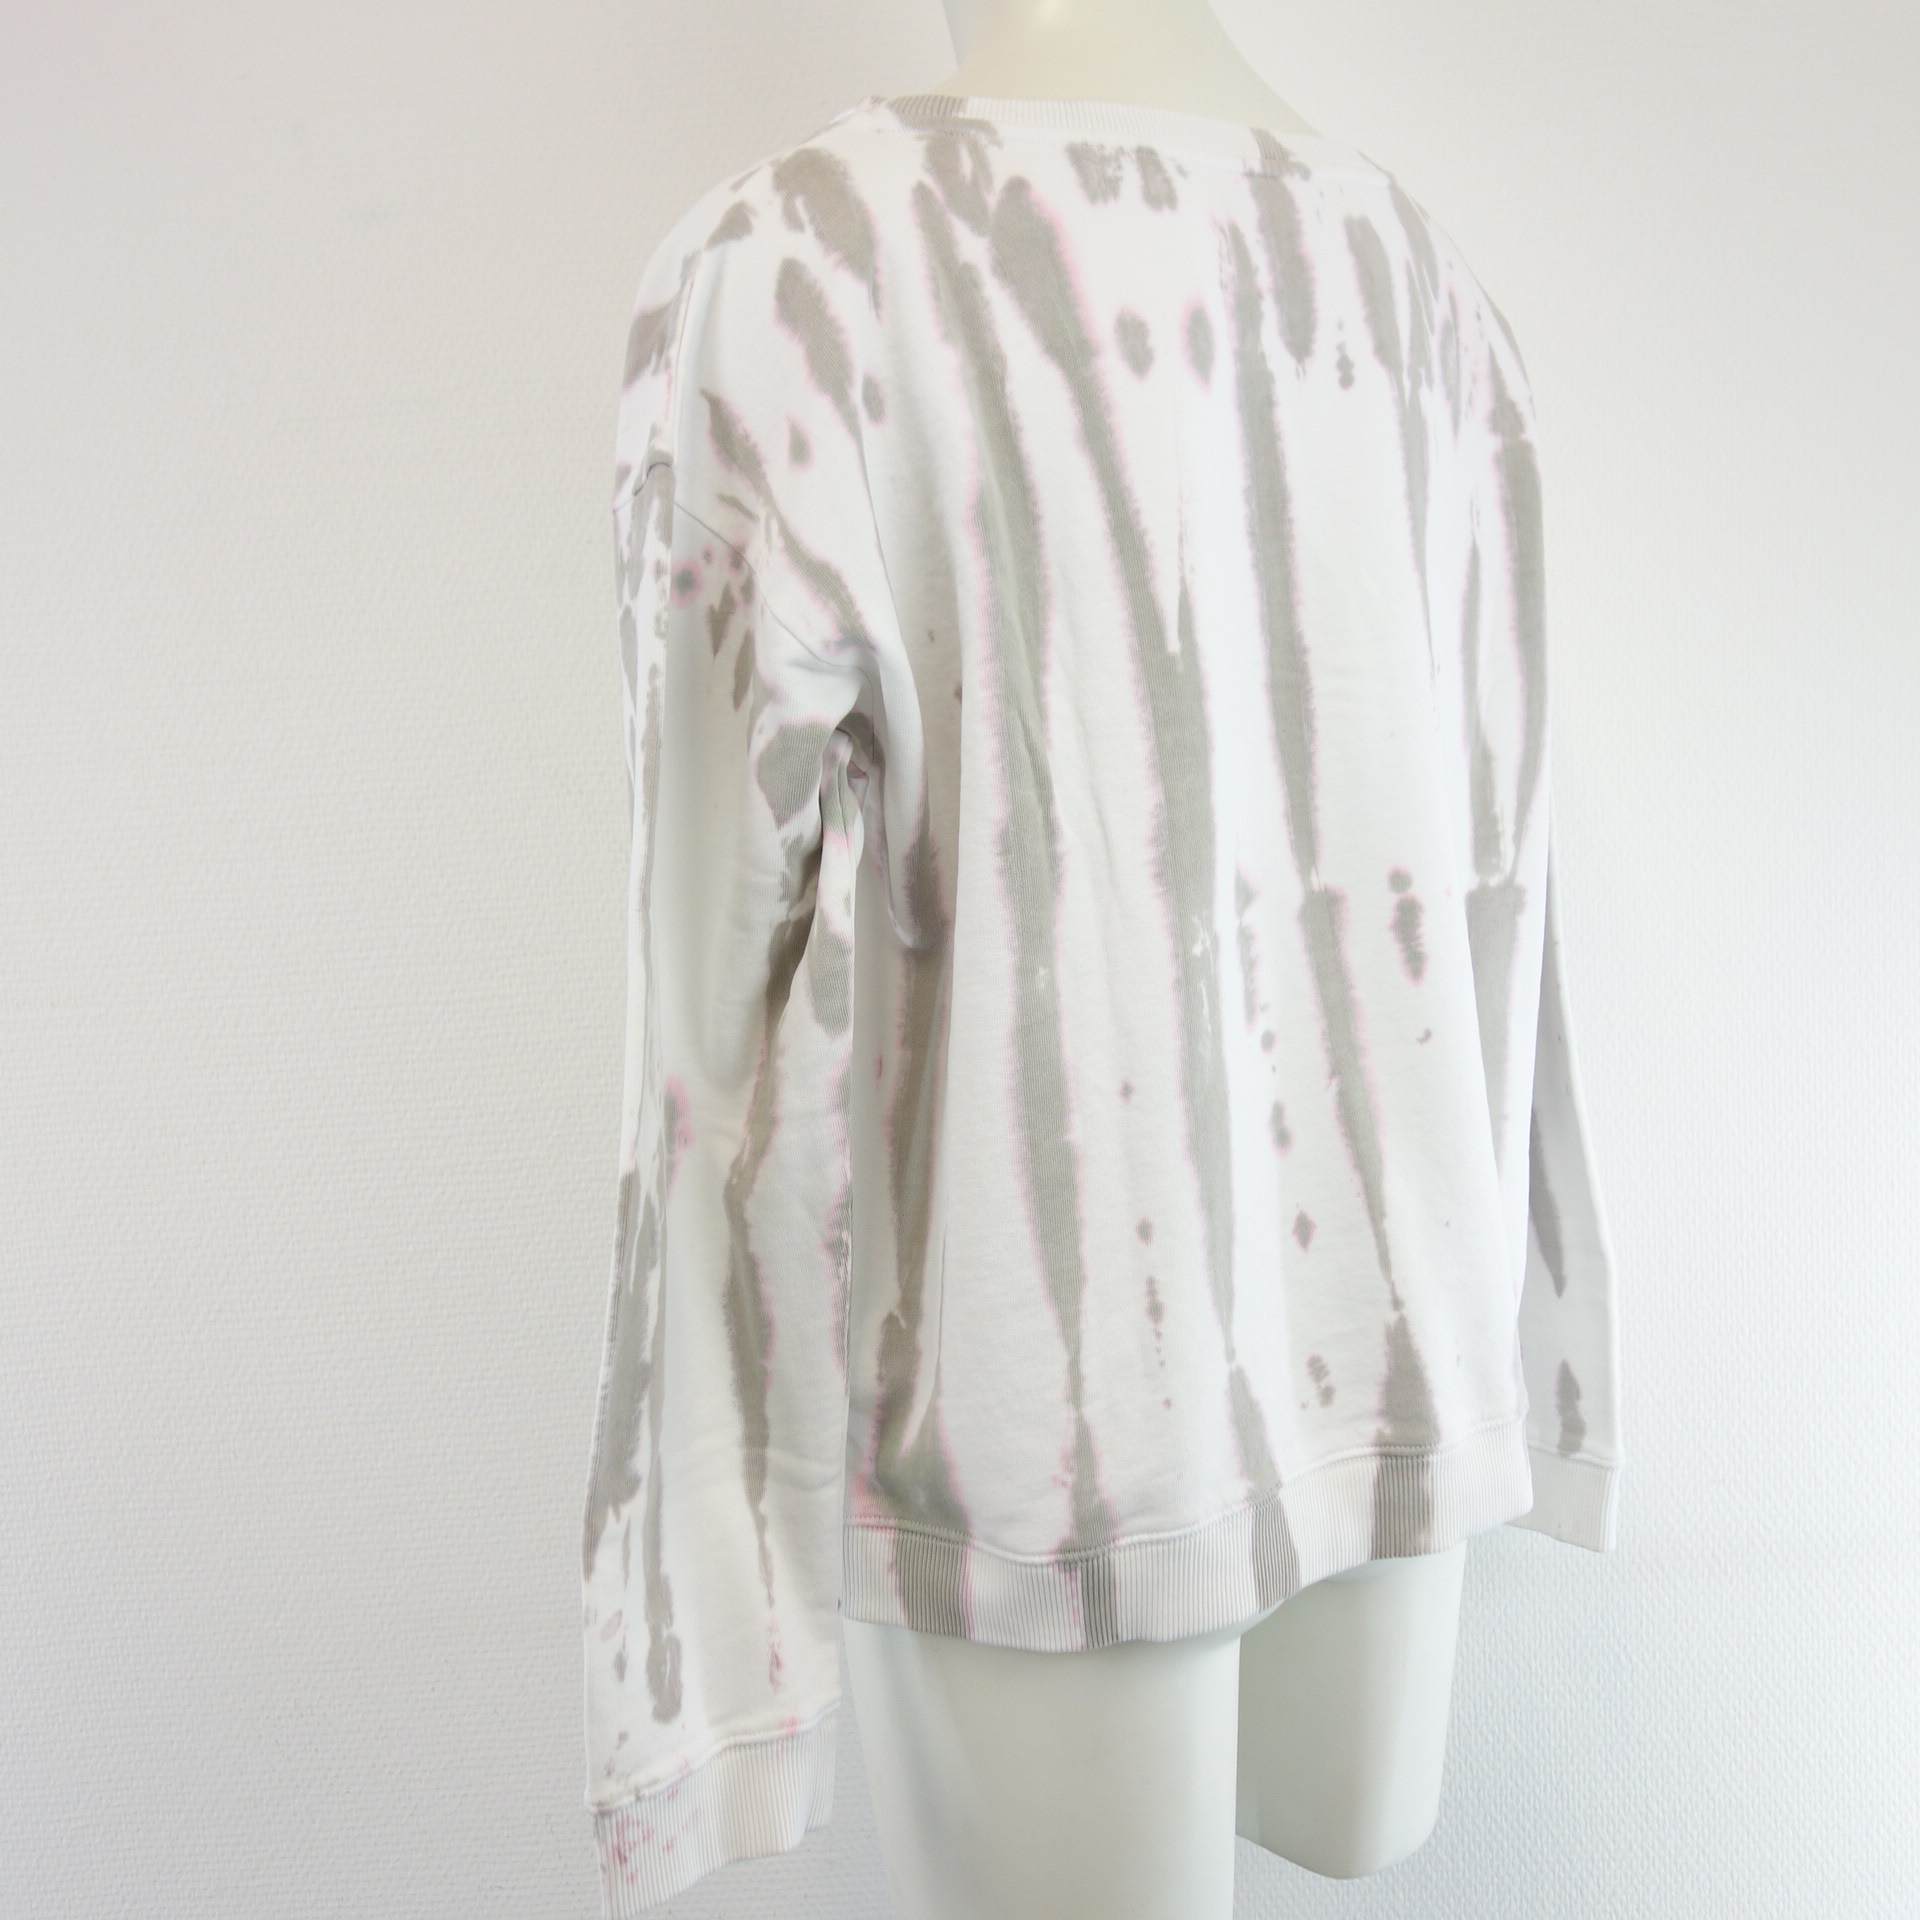 JUVIA Damen Sweatshirt Shirt  Pullover Oberteil Muster Weiß Khaki Rosa Baumwolle